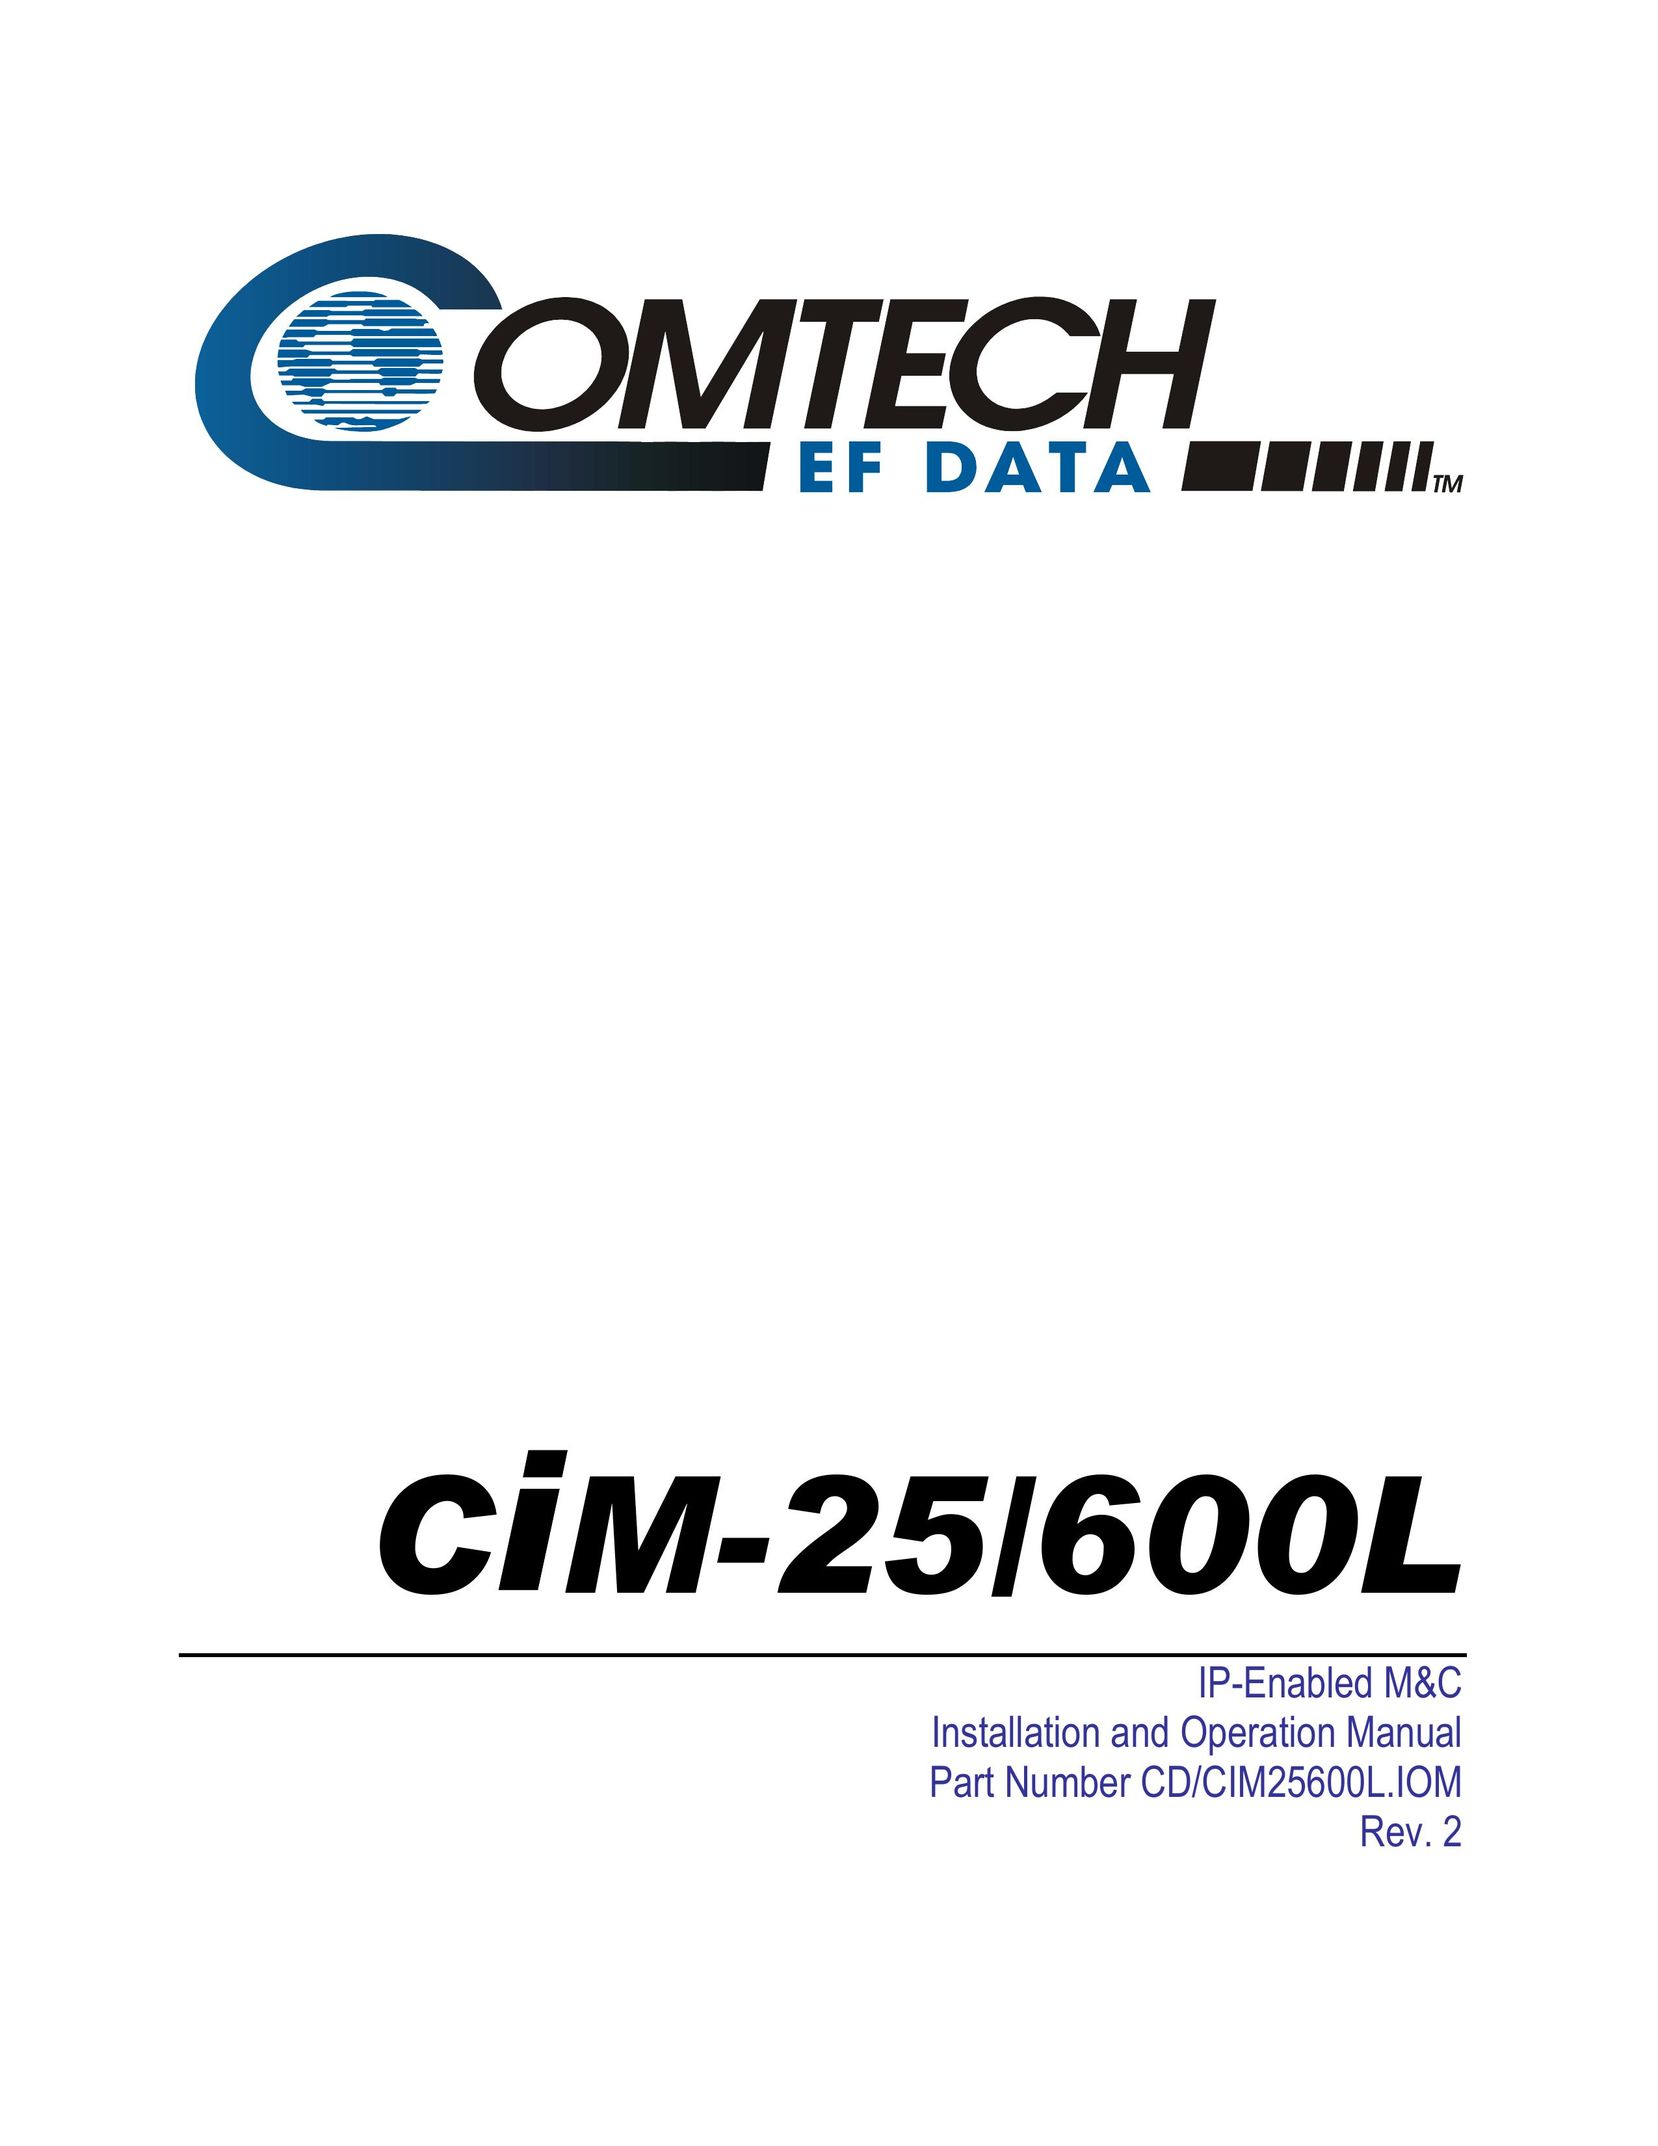 Mocomtech IP-Enabled M&C Network Hardware User Manual